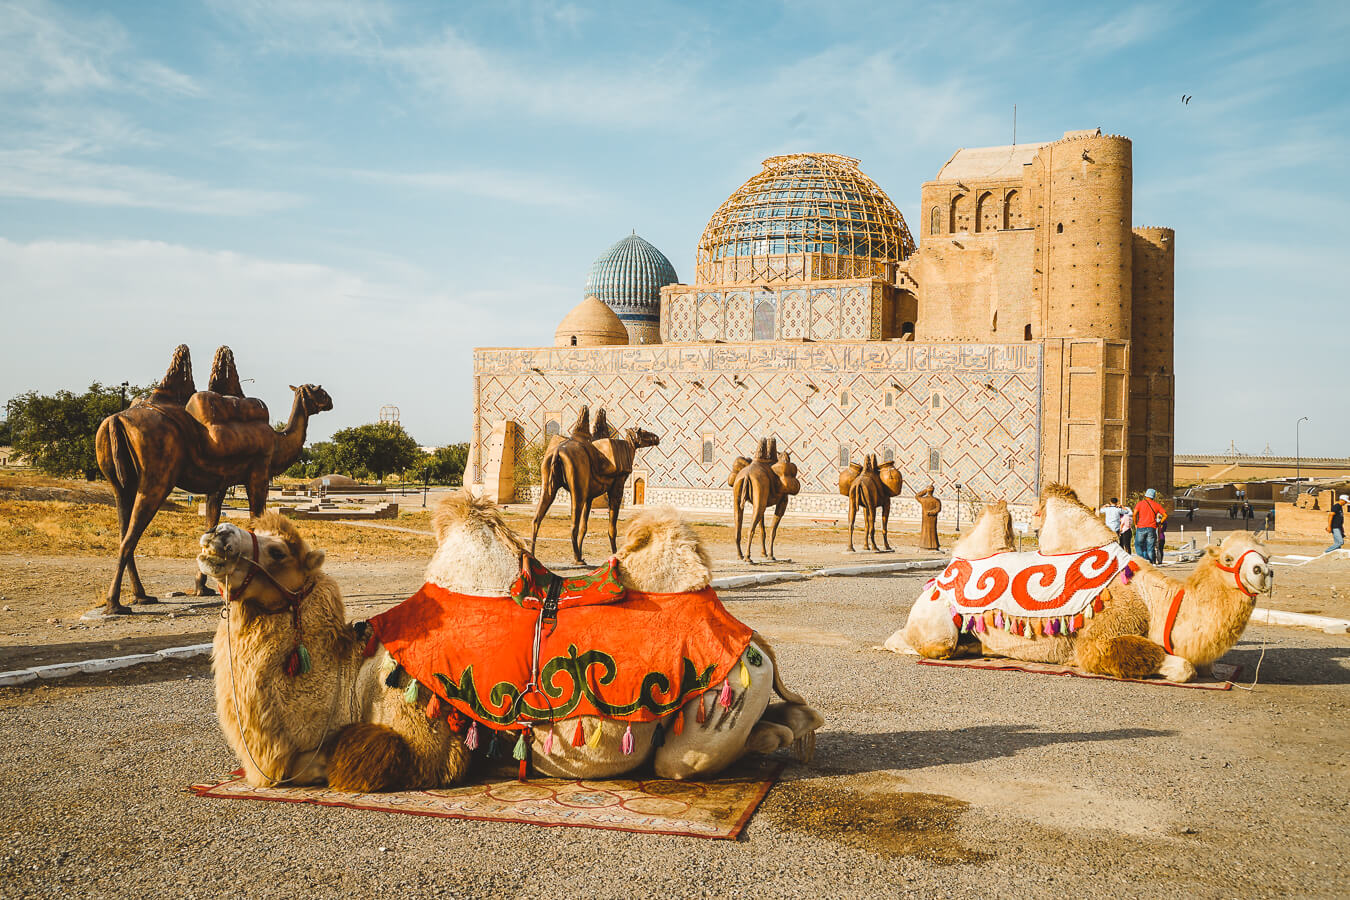 Turkestan mausoleum with camels